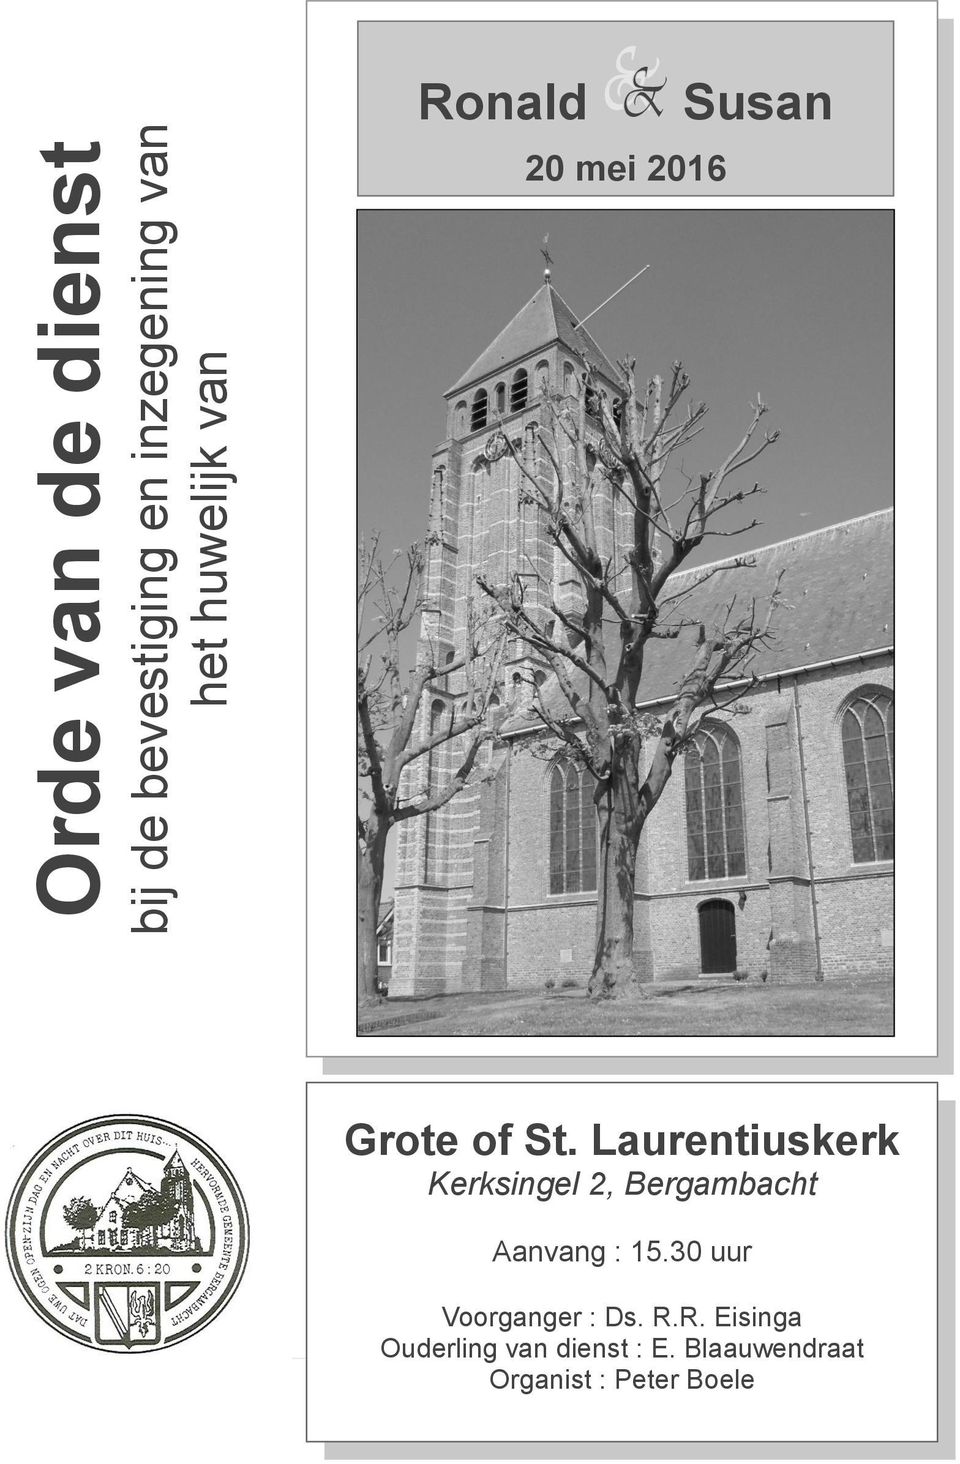 Laurentiuskerk Kerksingel 2, Bergambacht Aanvang : 15.